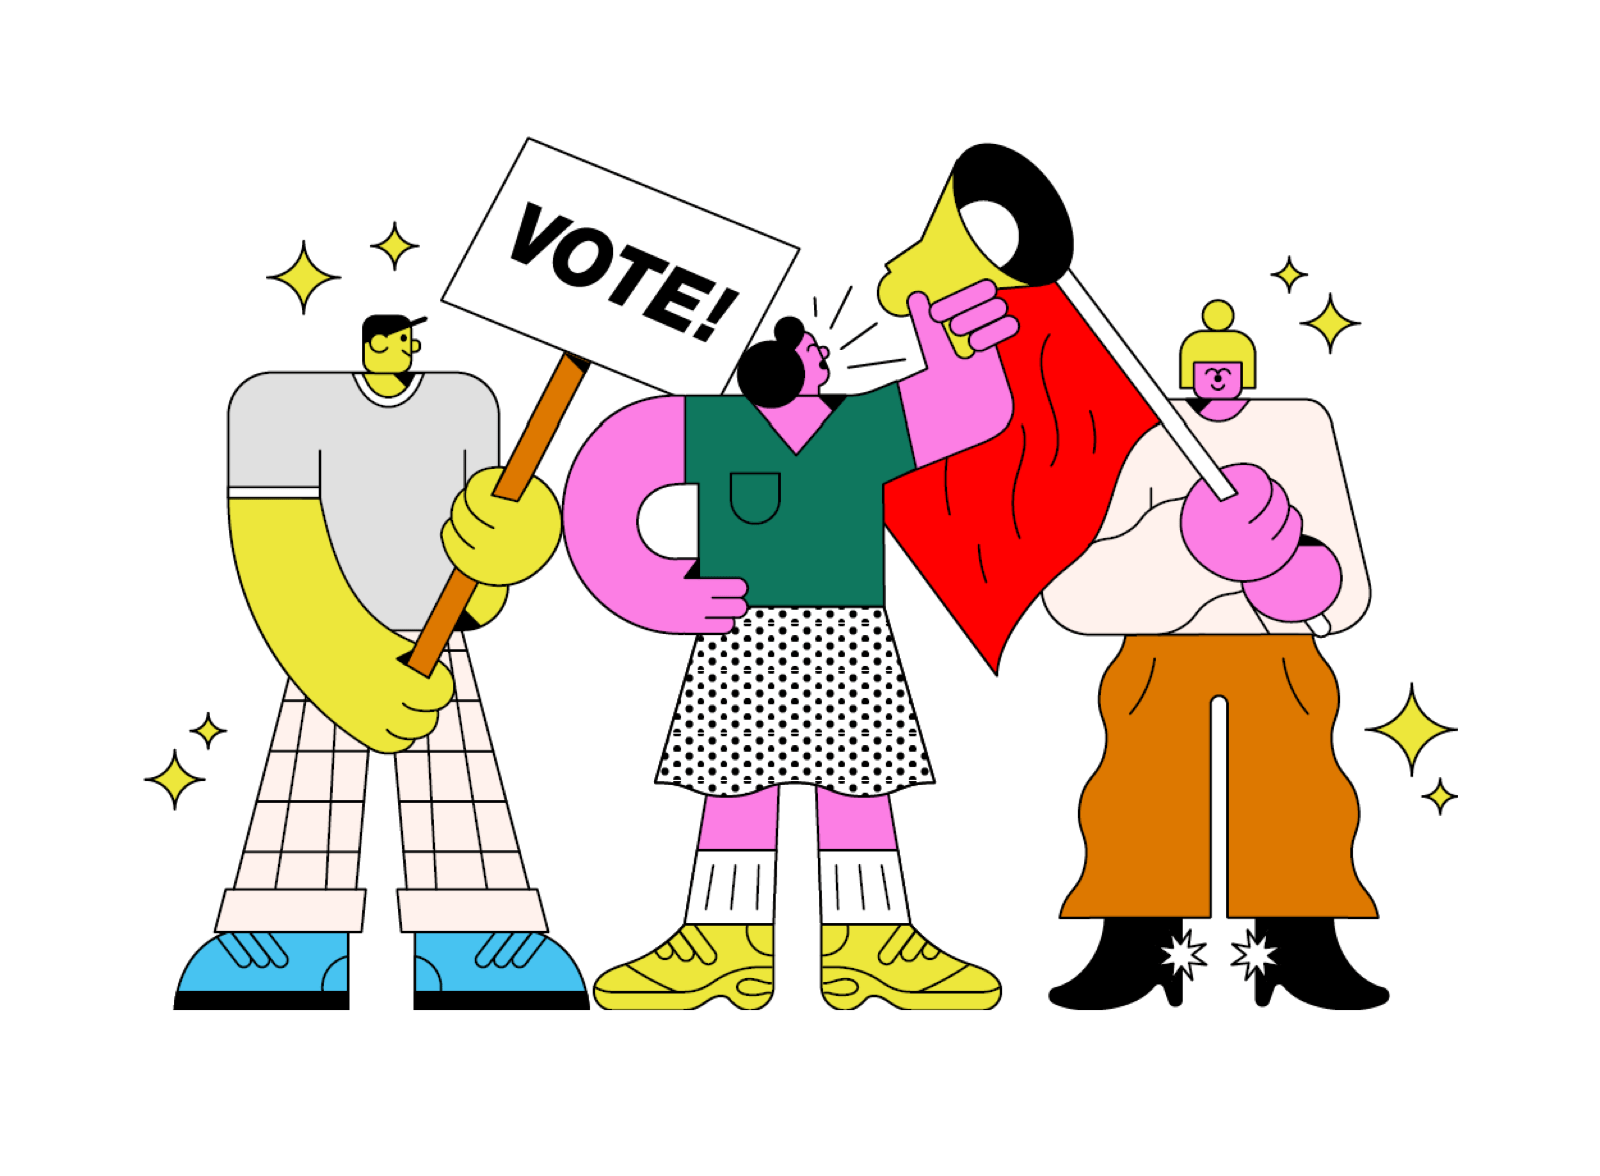 Free Election Illustrations